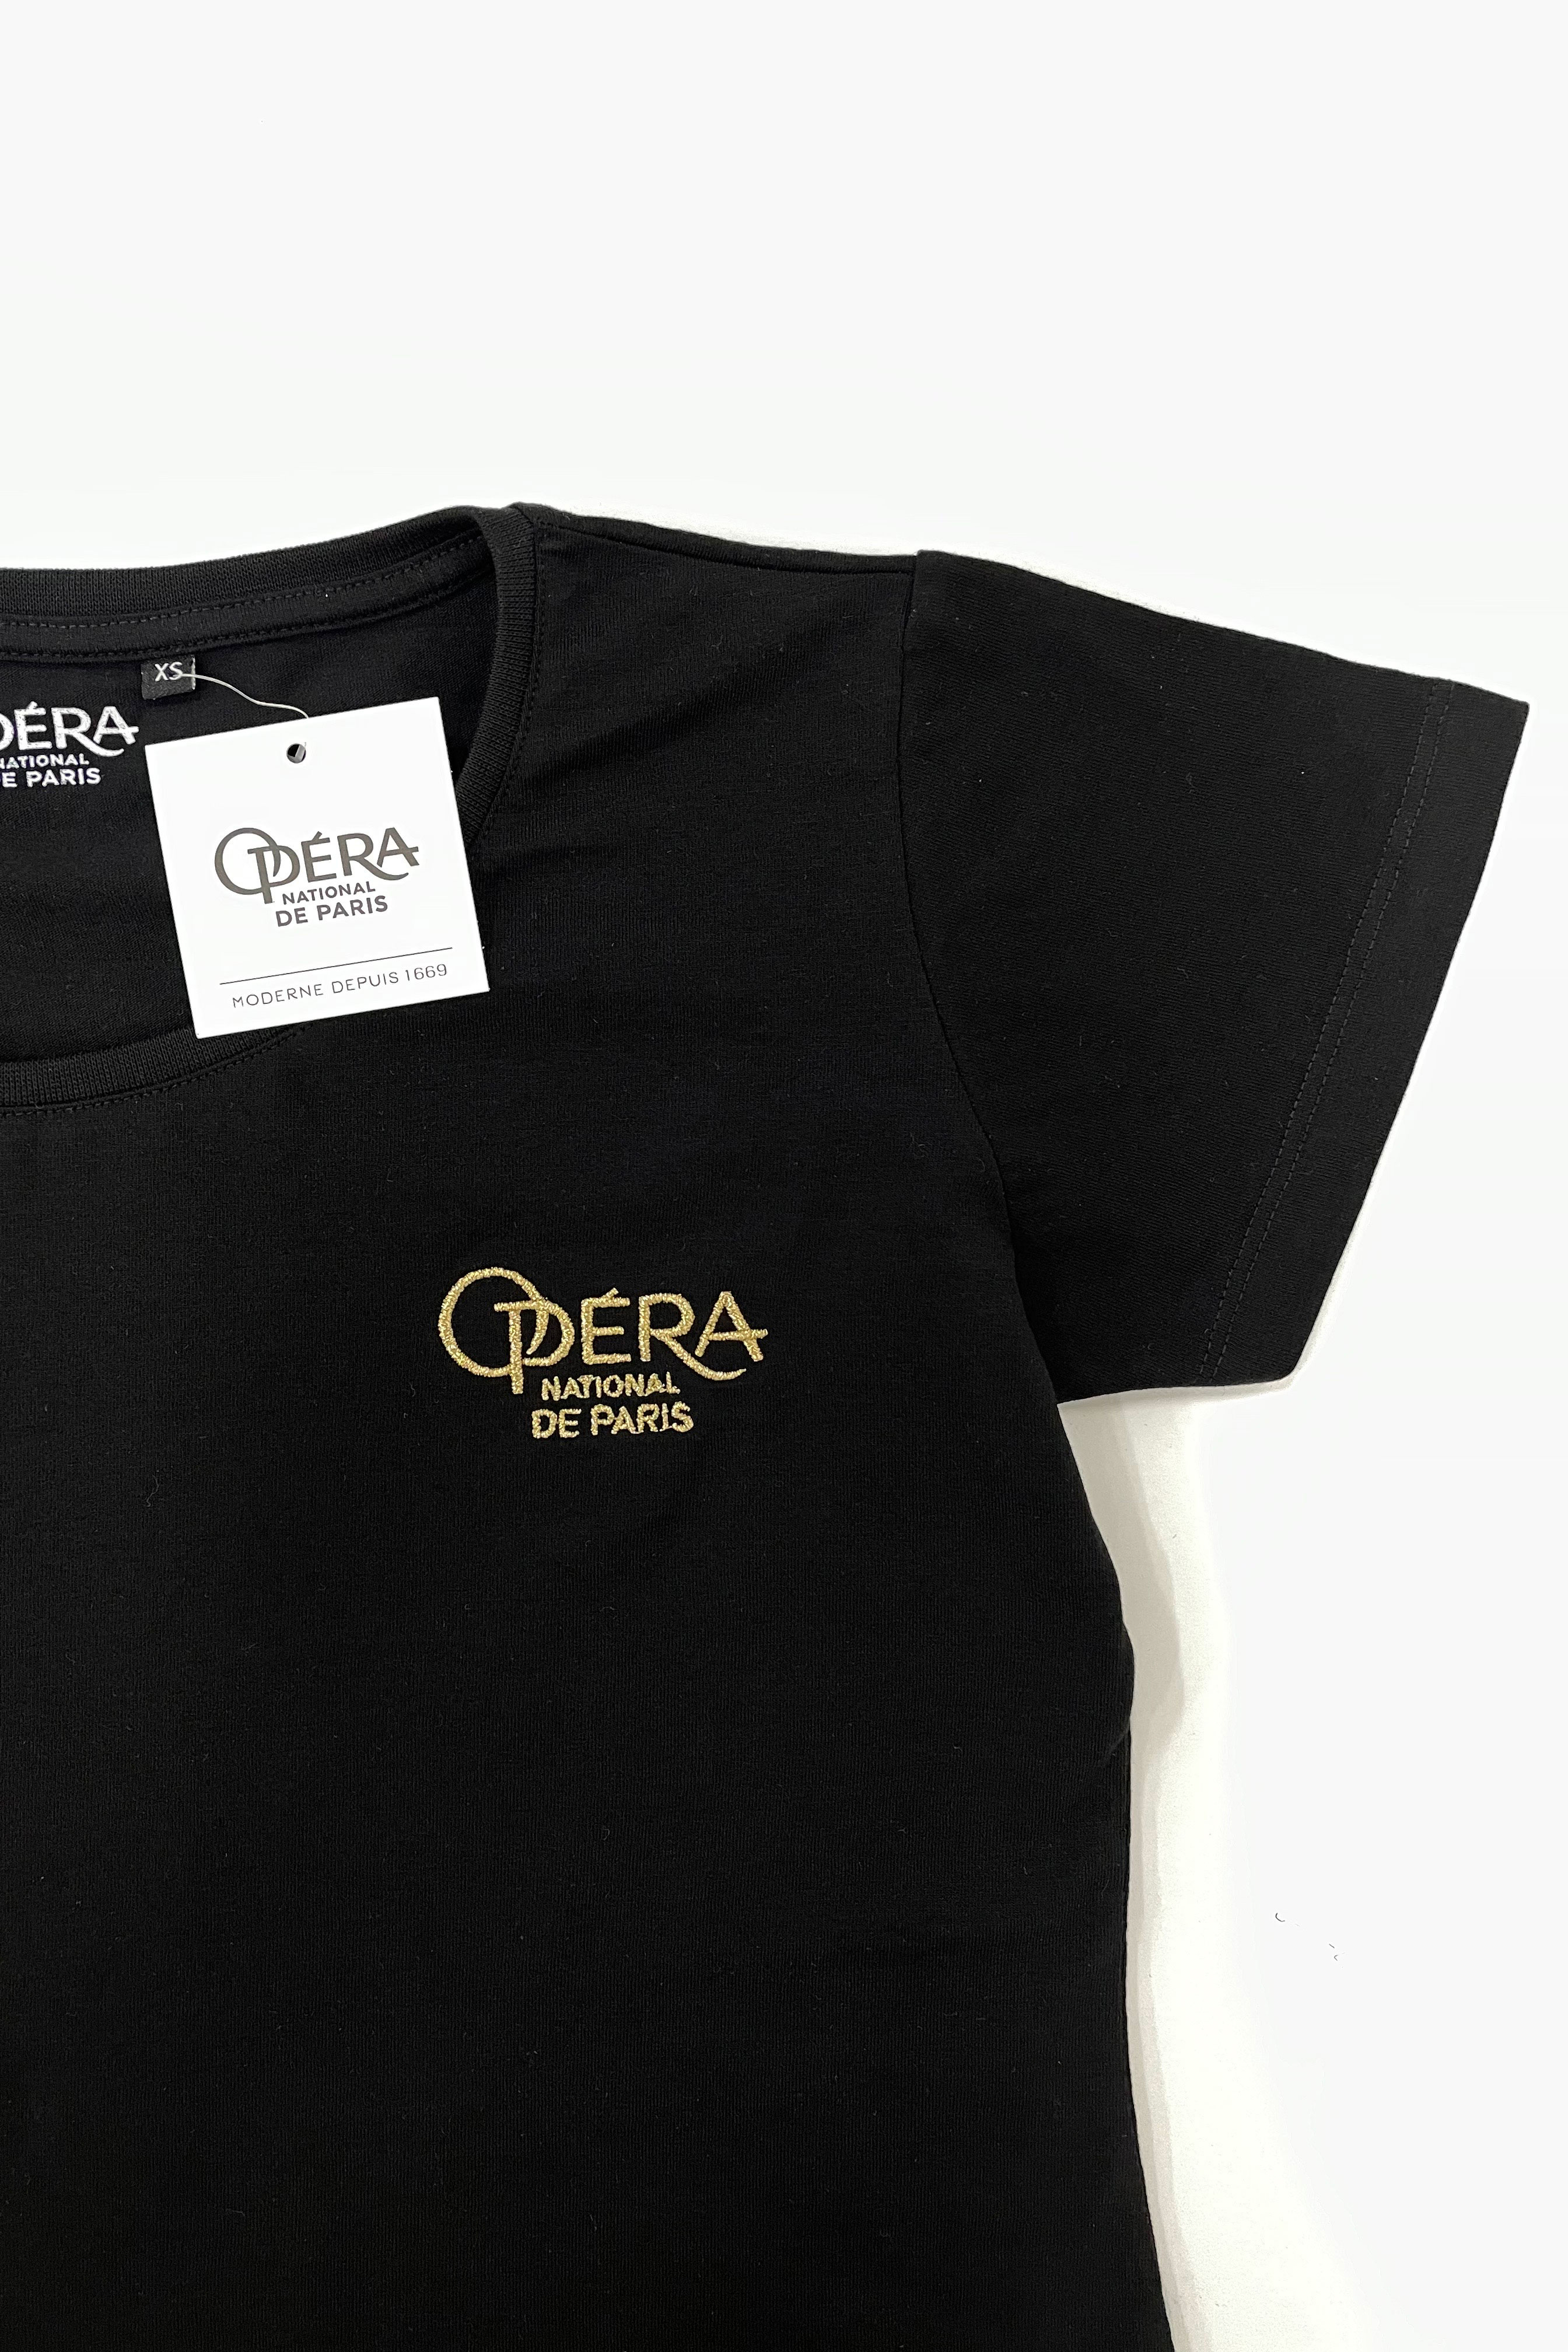 [Opéra National de Paris] Embroidery T-shirts